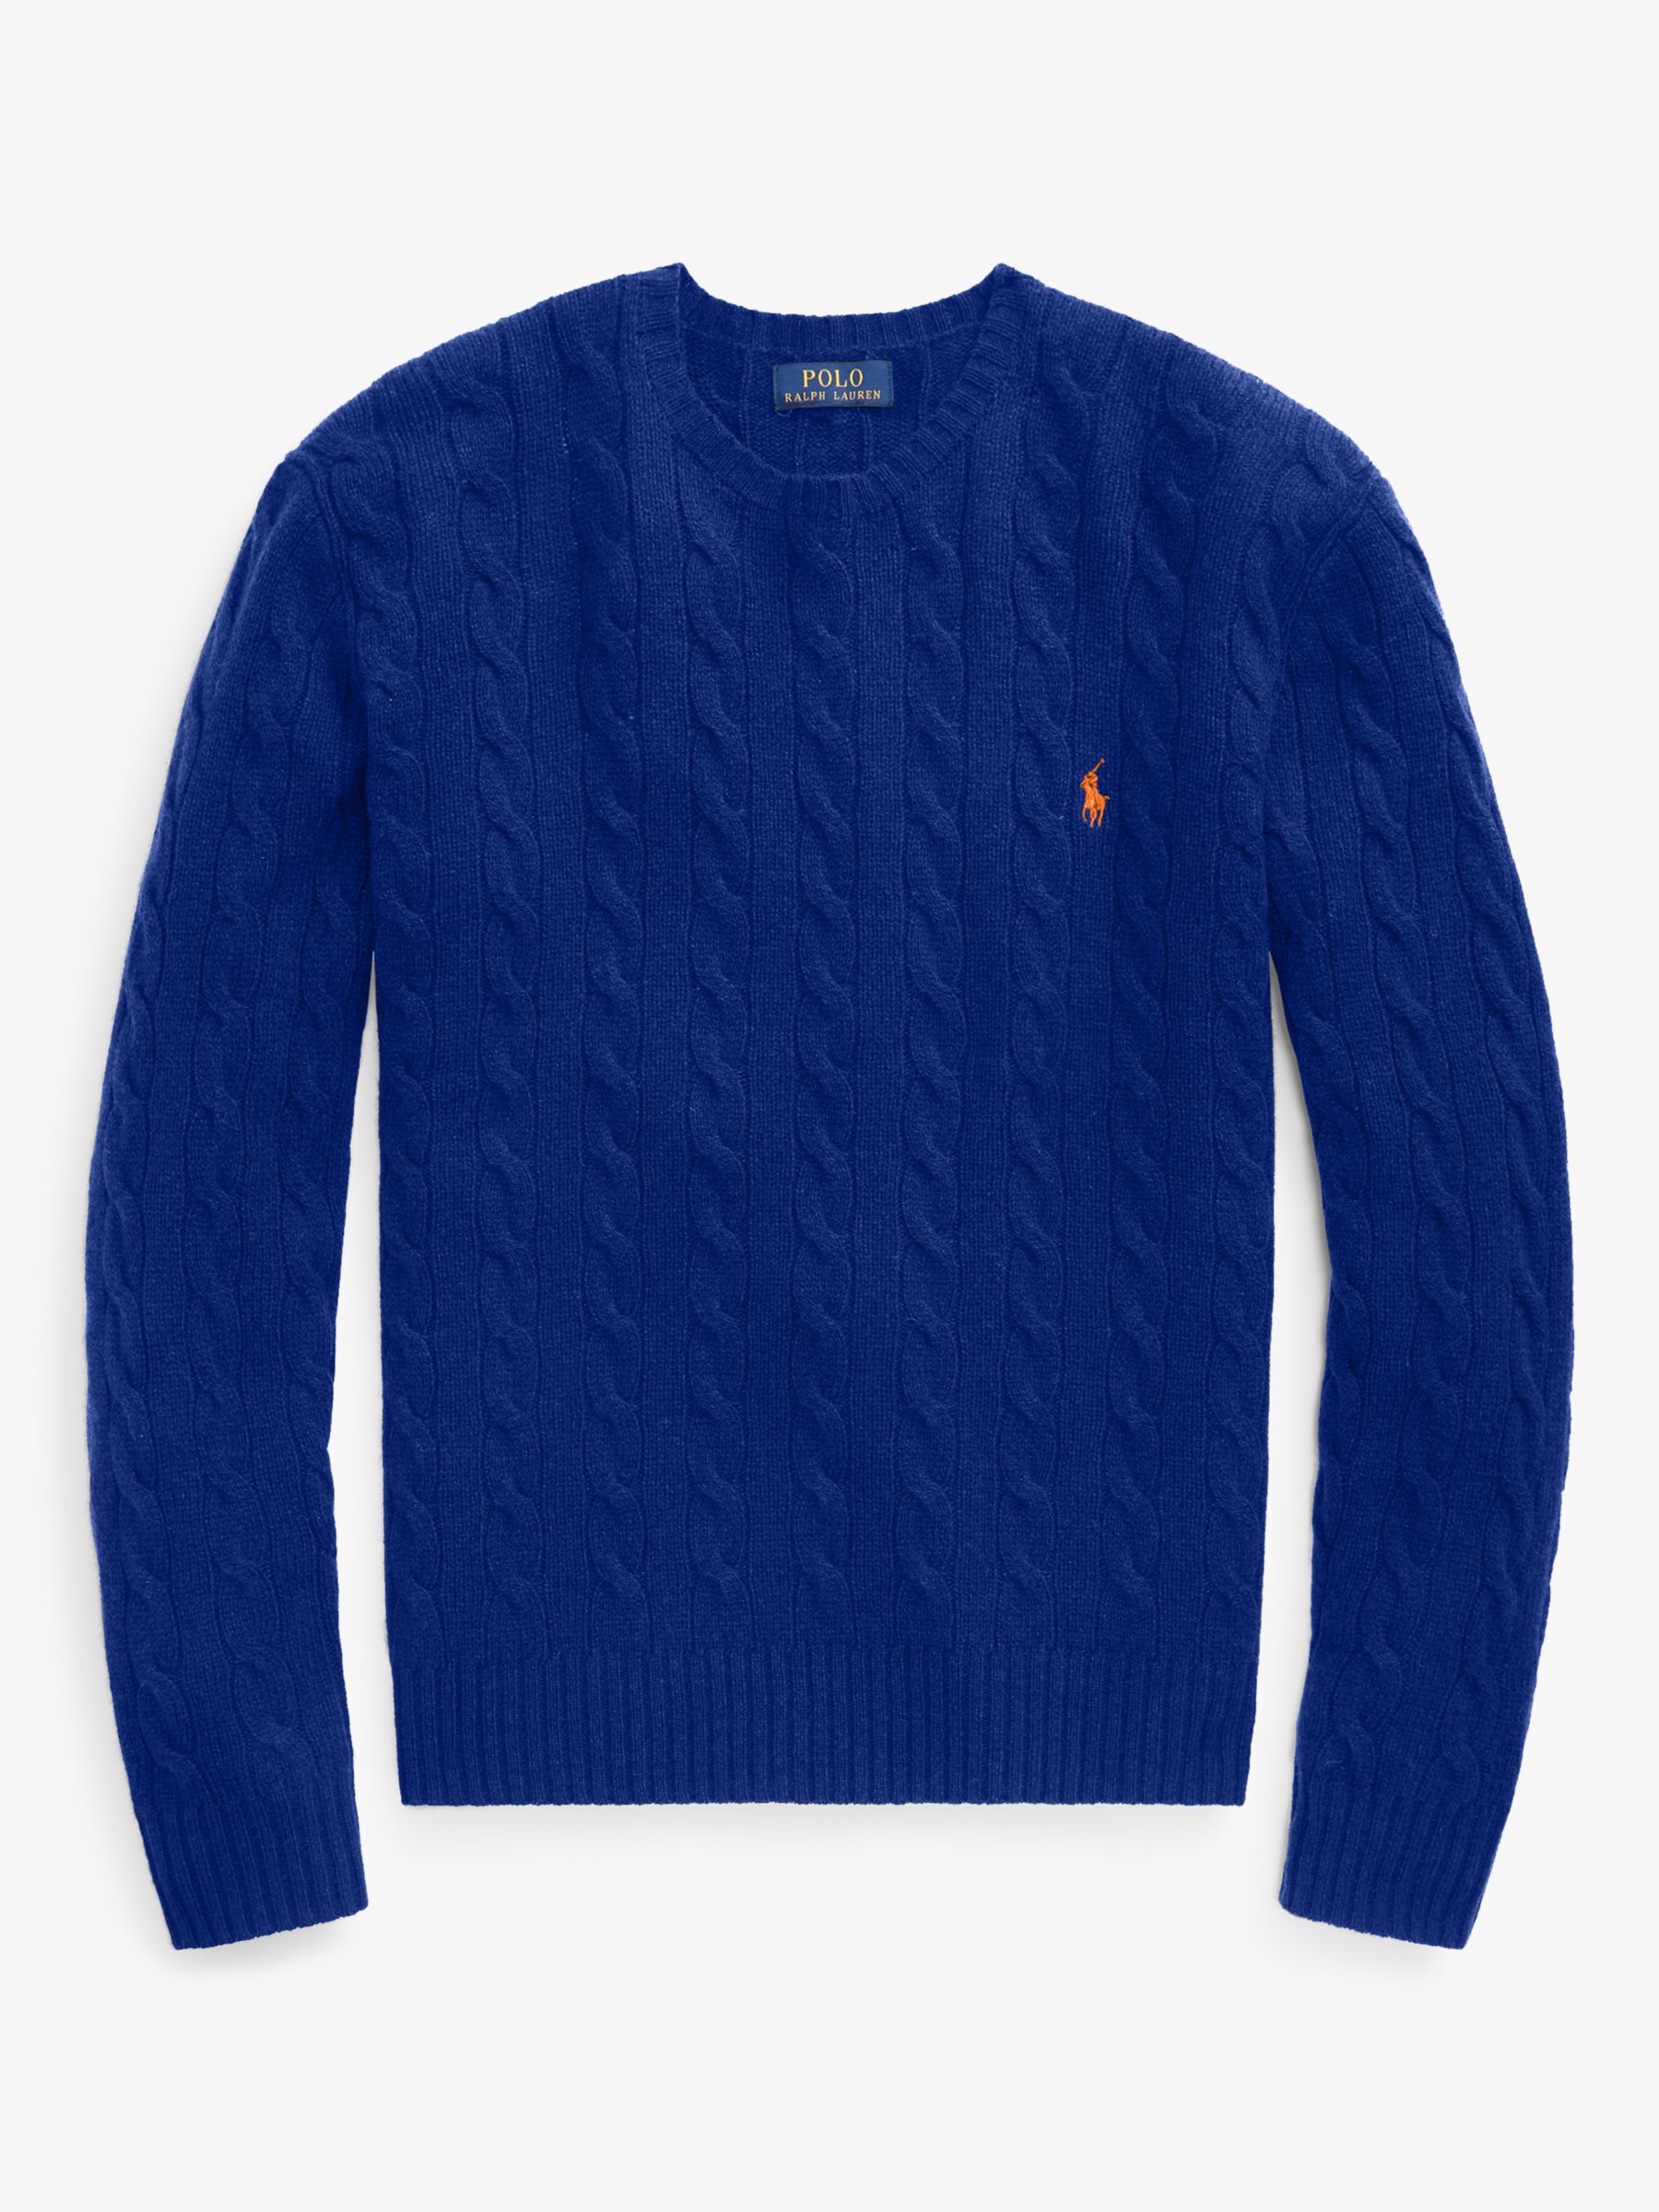 universal threads sweatshirt